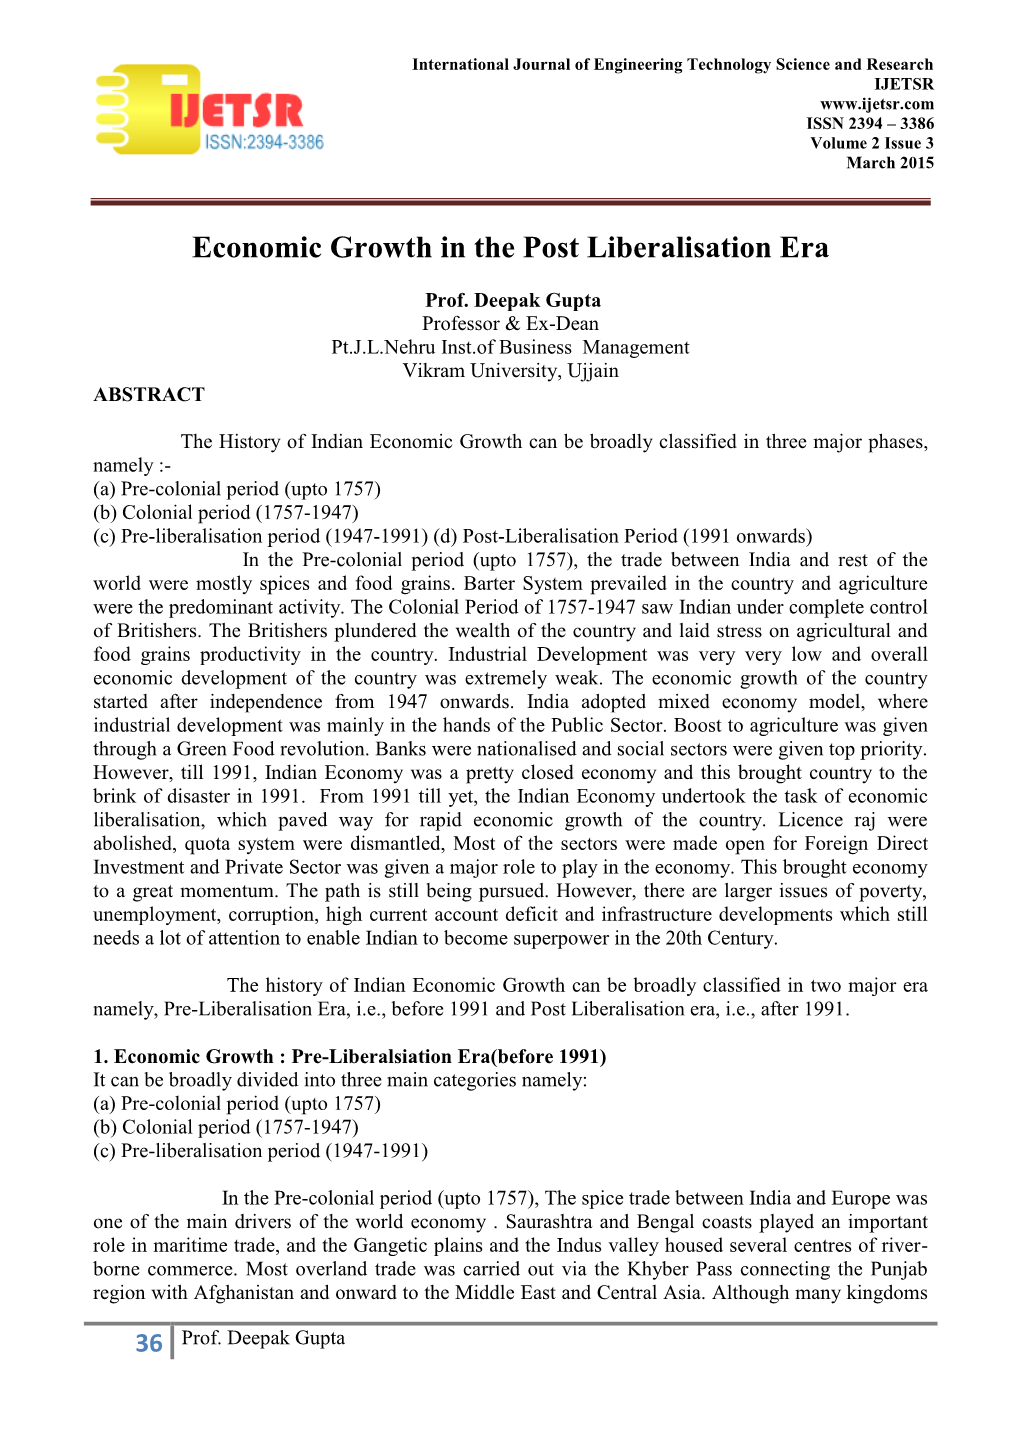 Economic Growth in the Post Liberalisation Era